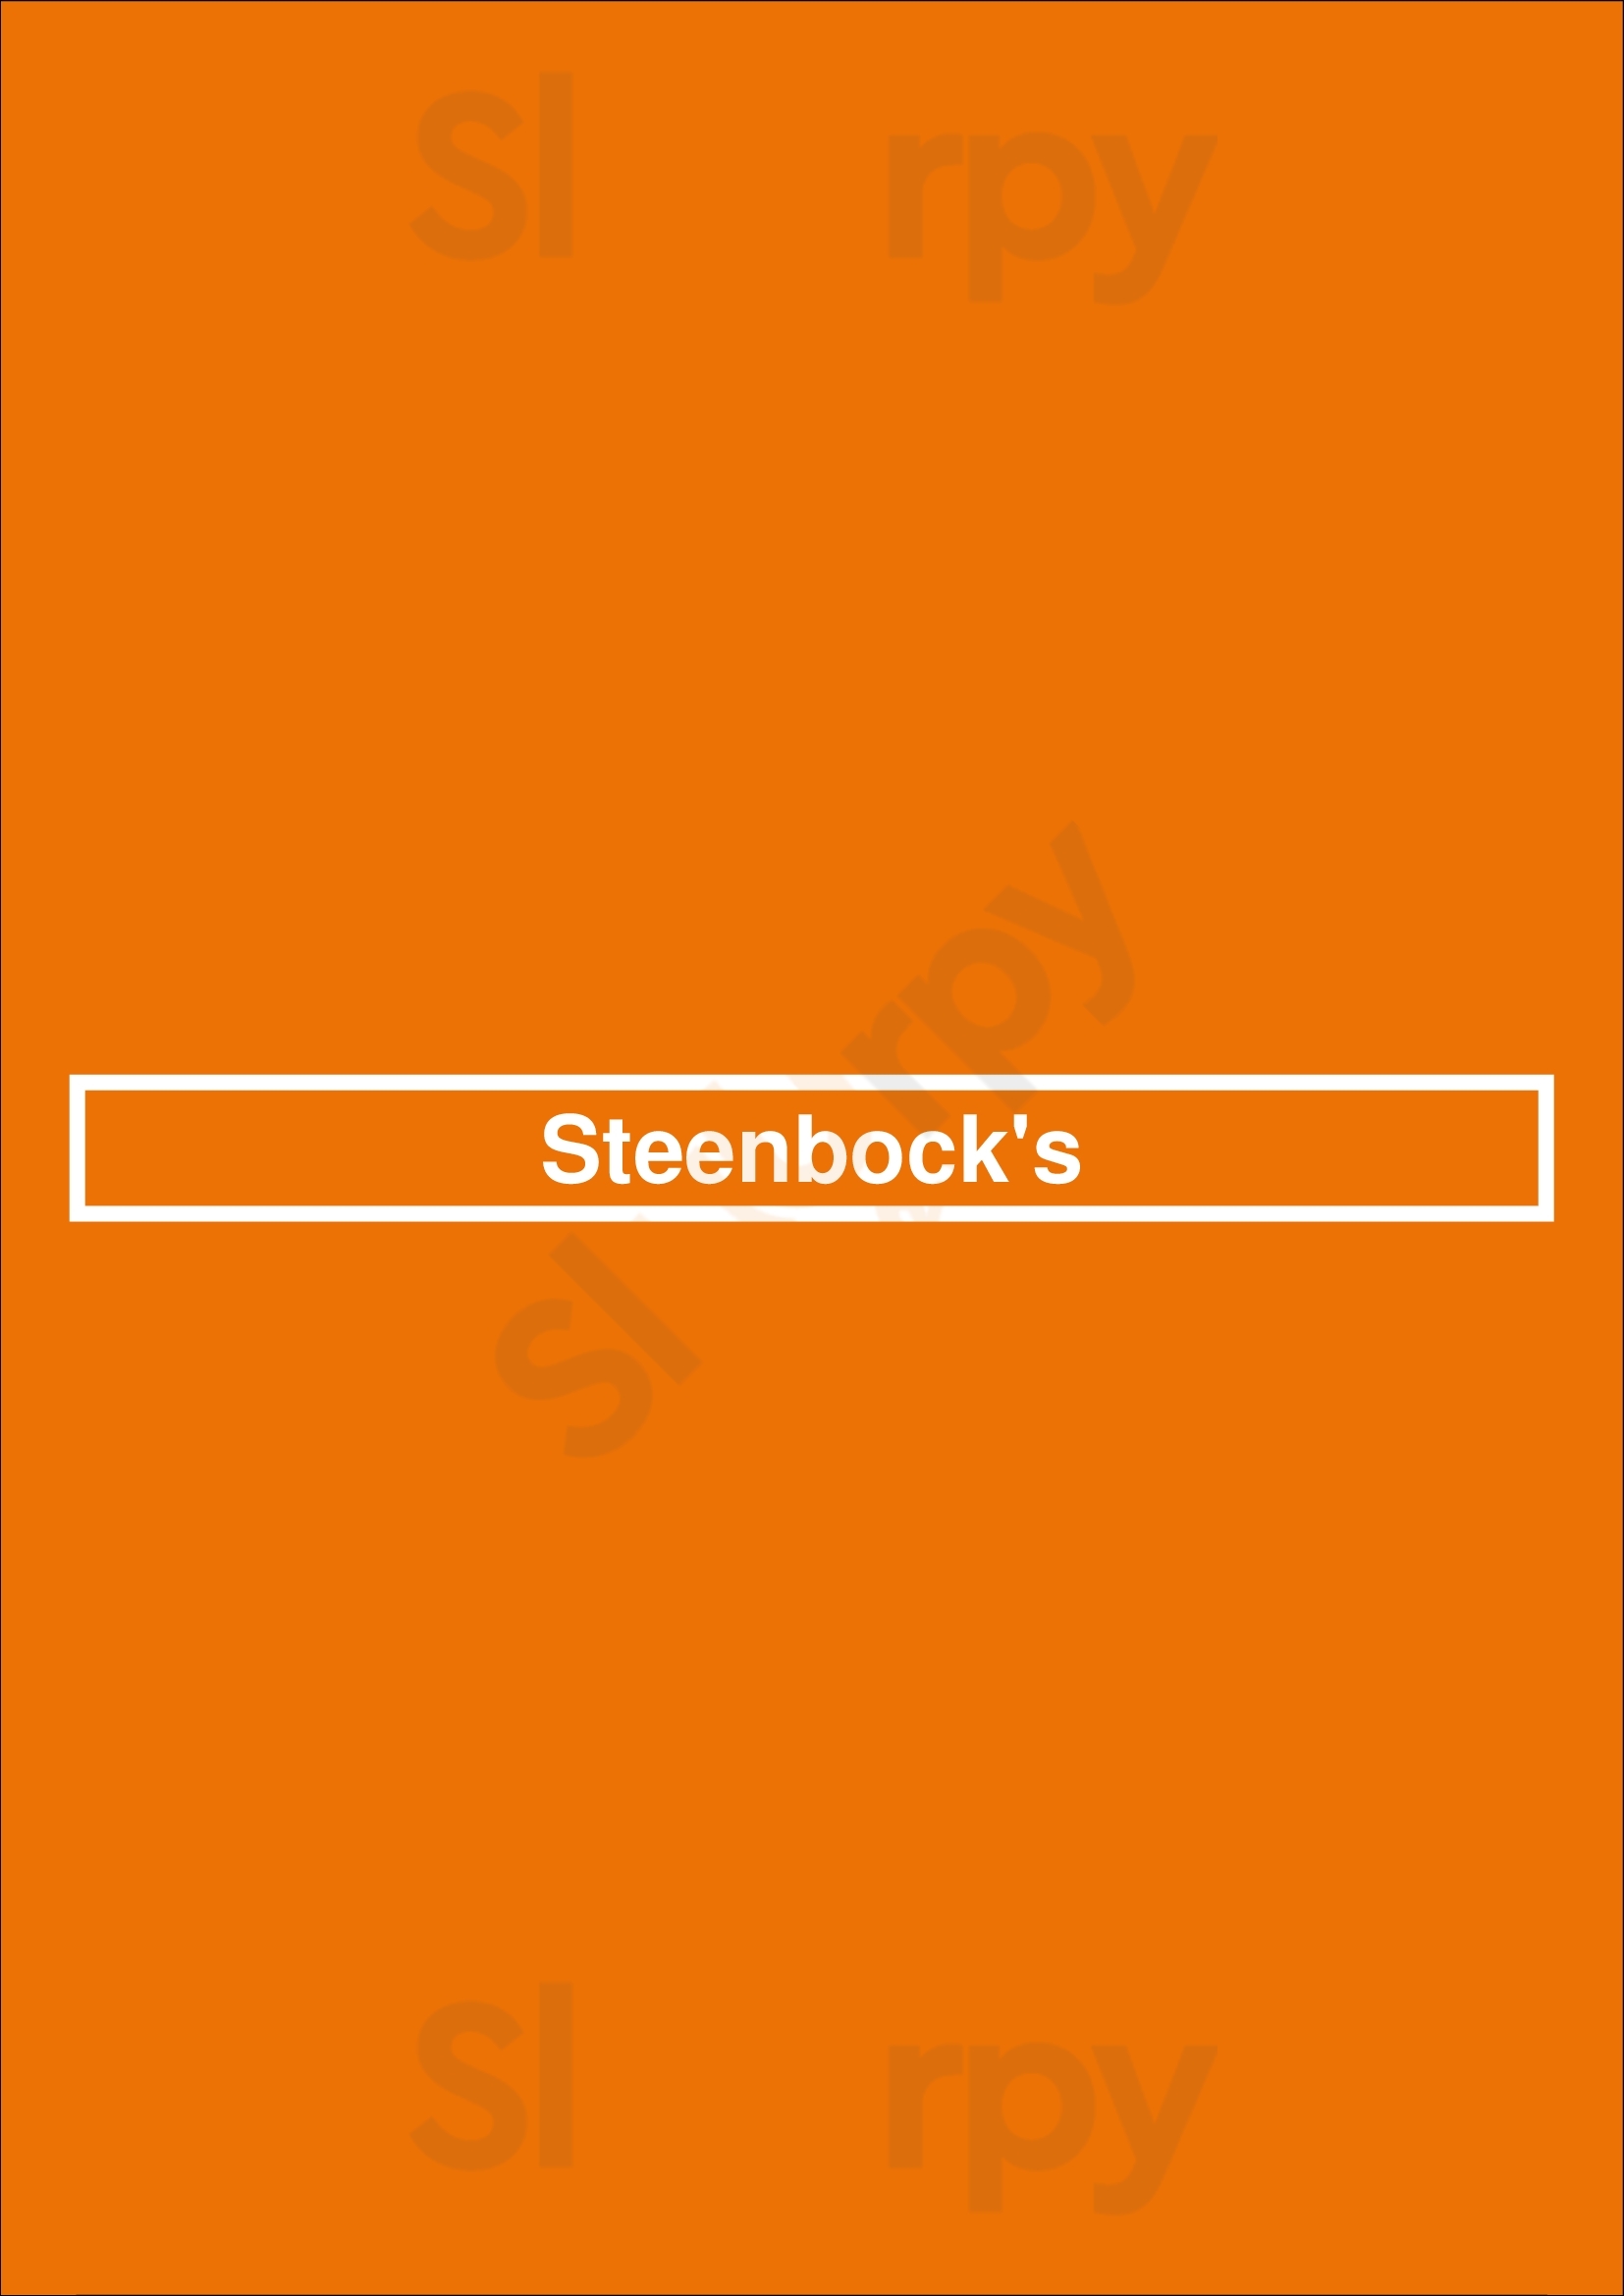 Steenbock's Madison Menu - 1